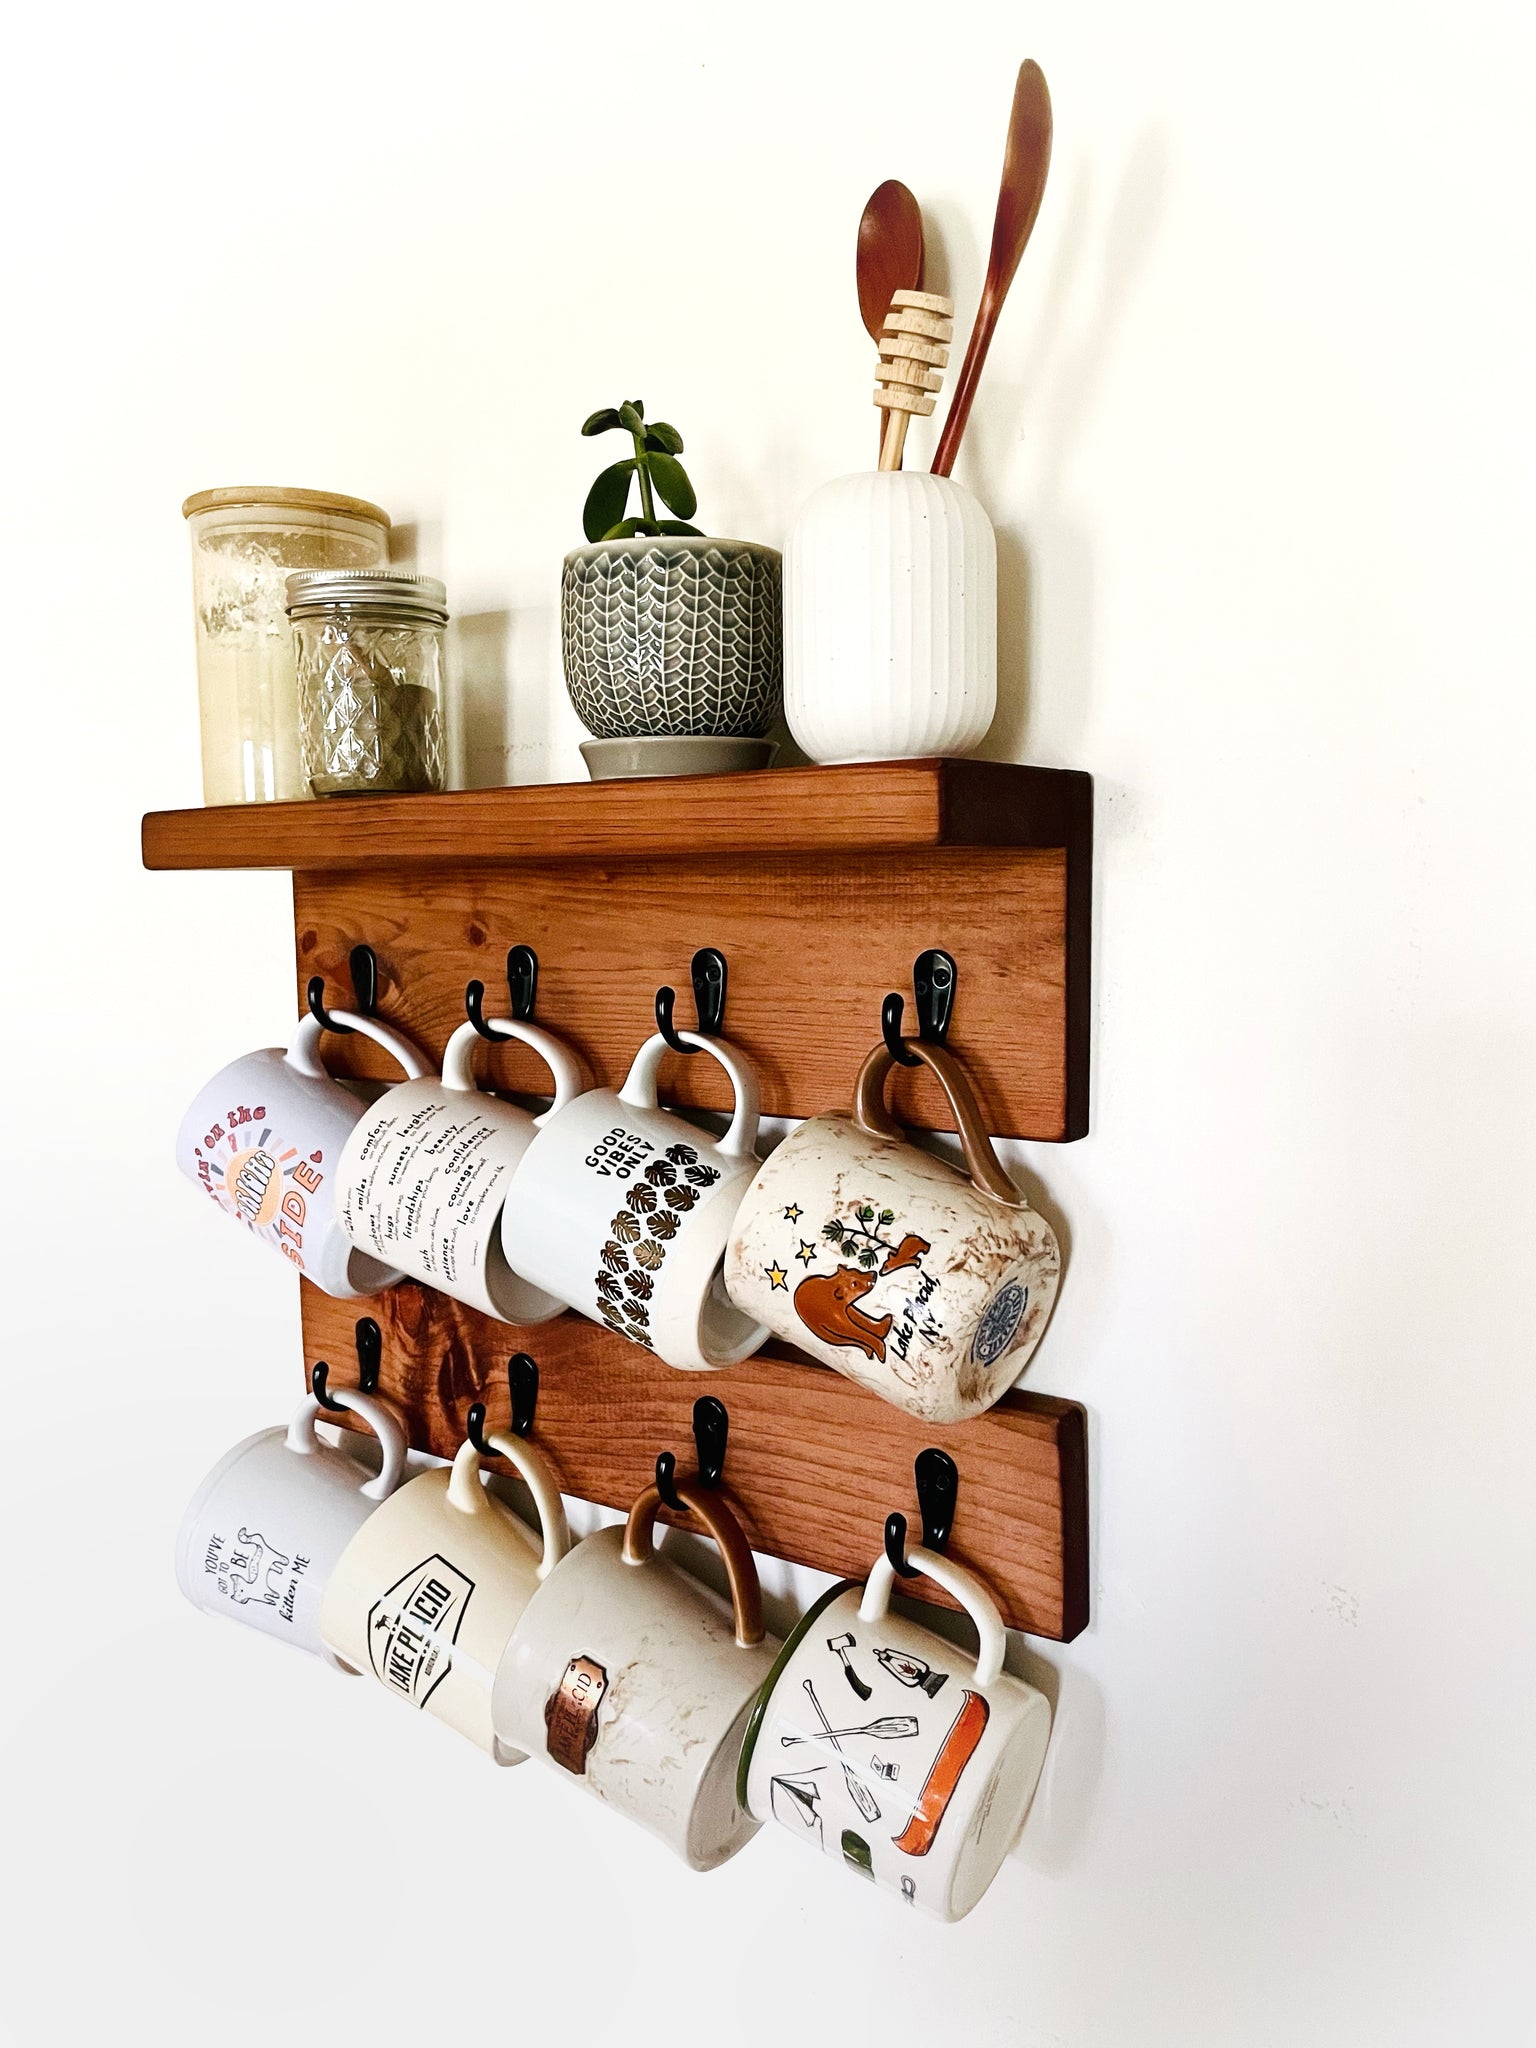 Coffee Mug Holder with Shelf, 8 cup